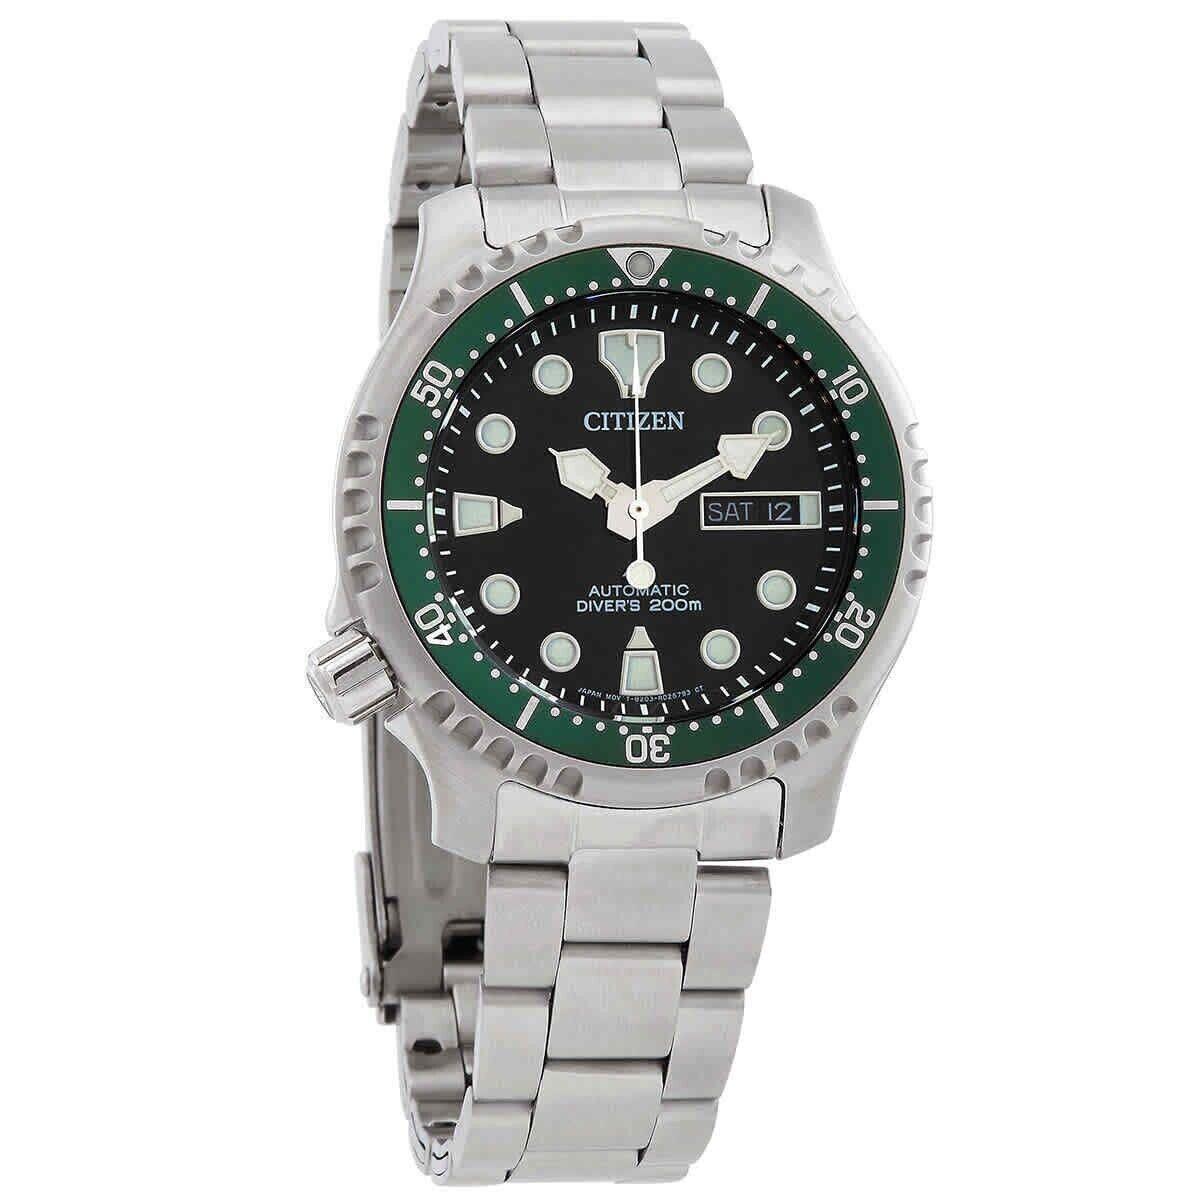 Citizen Men`s Promaster Automatic Black Dial Watch - NY0084-89E - Dial: Black, Band: Silver, Bezel: Green